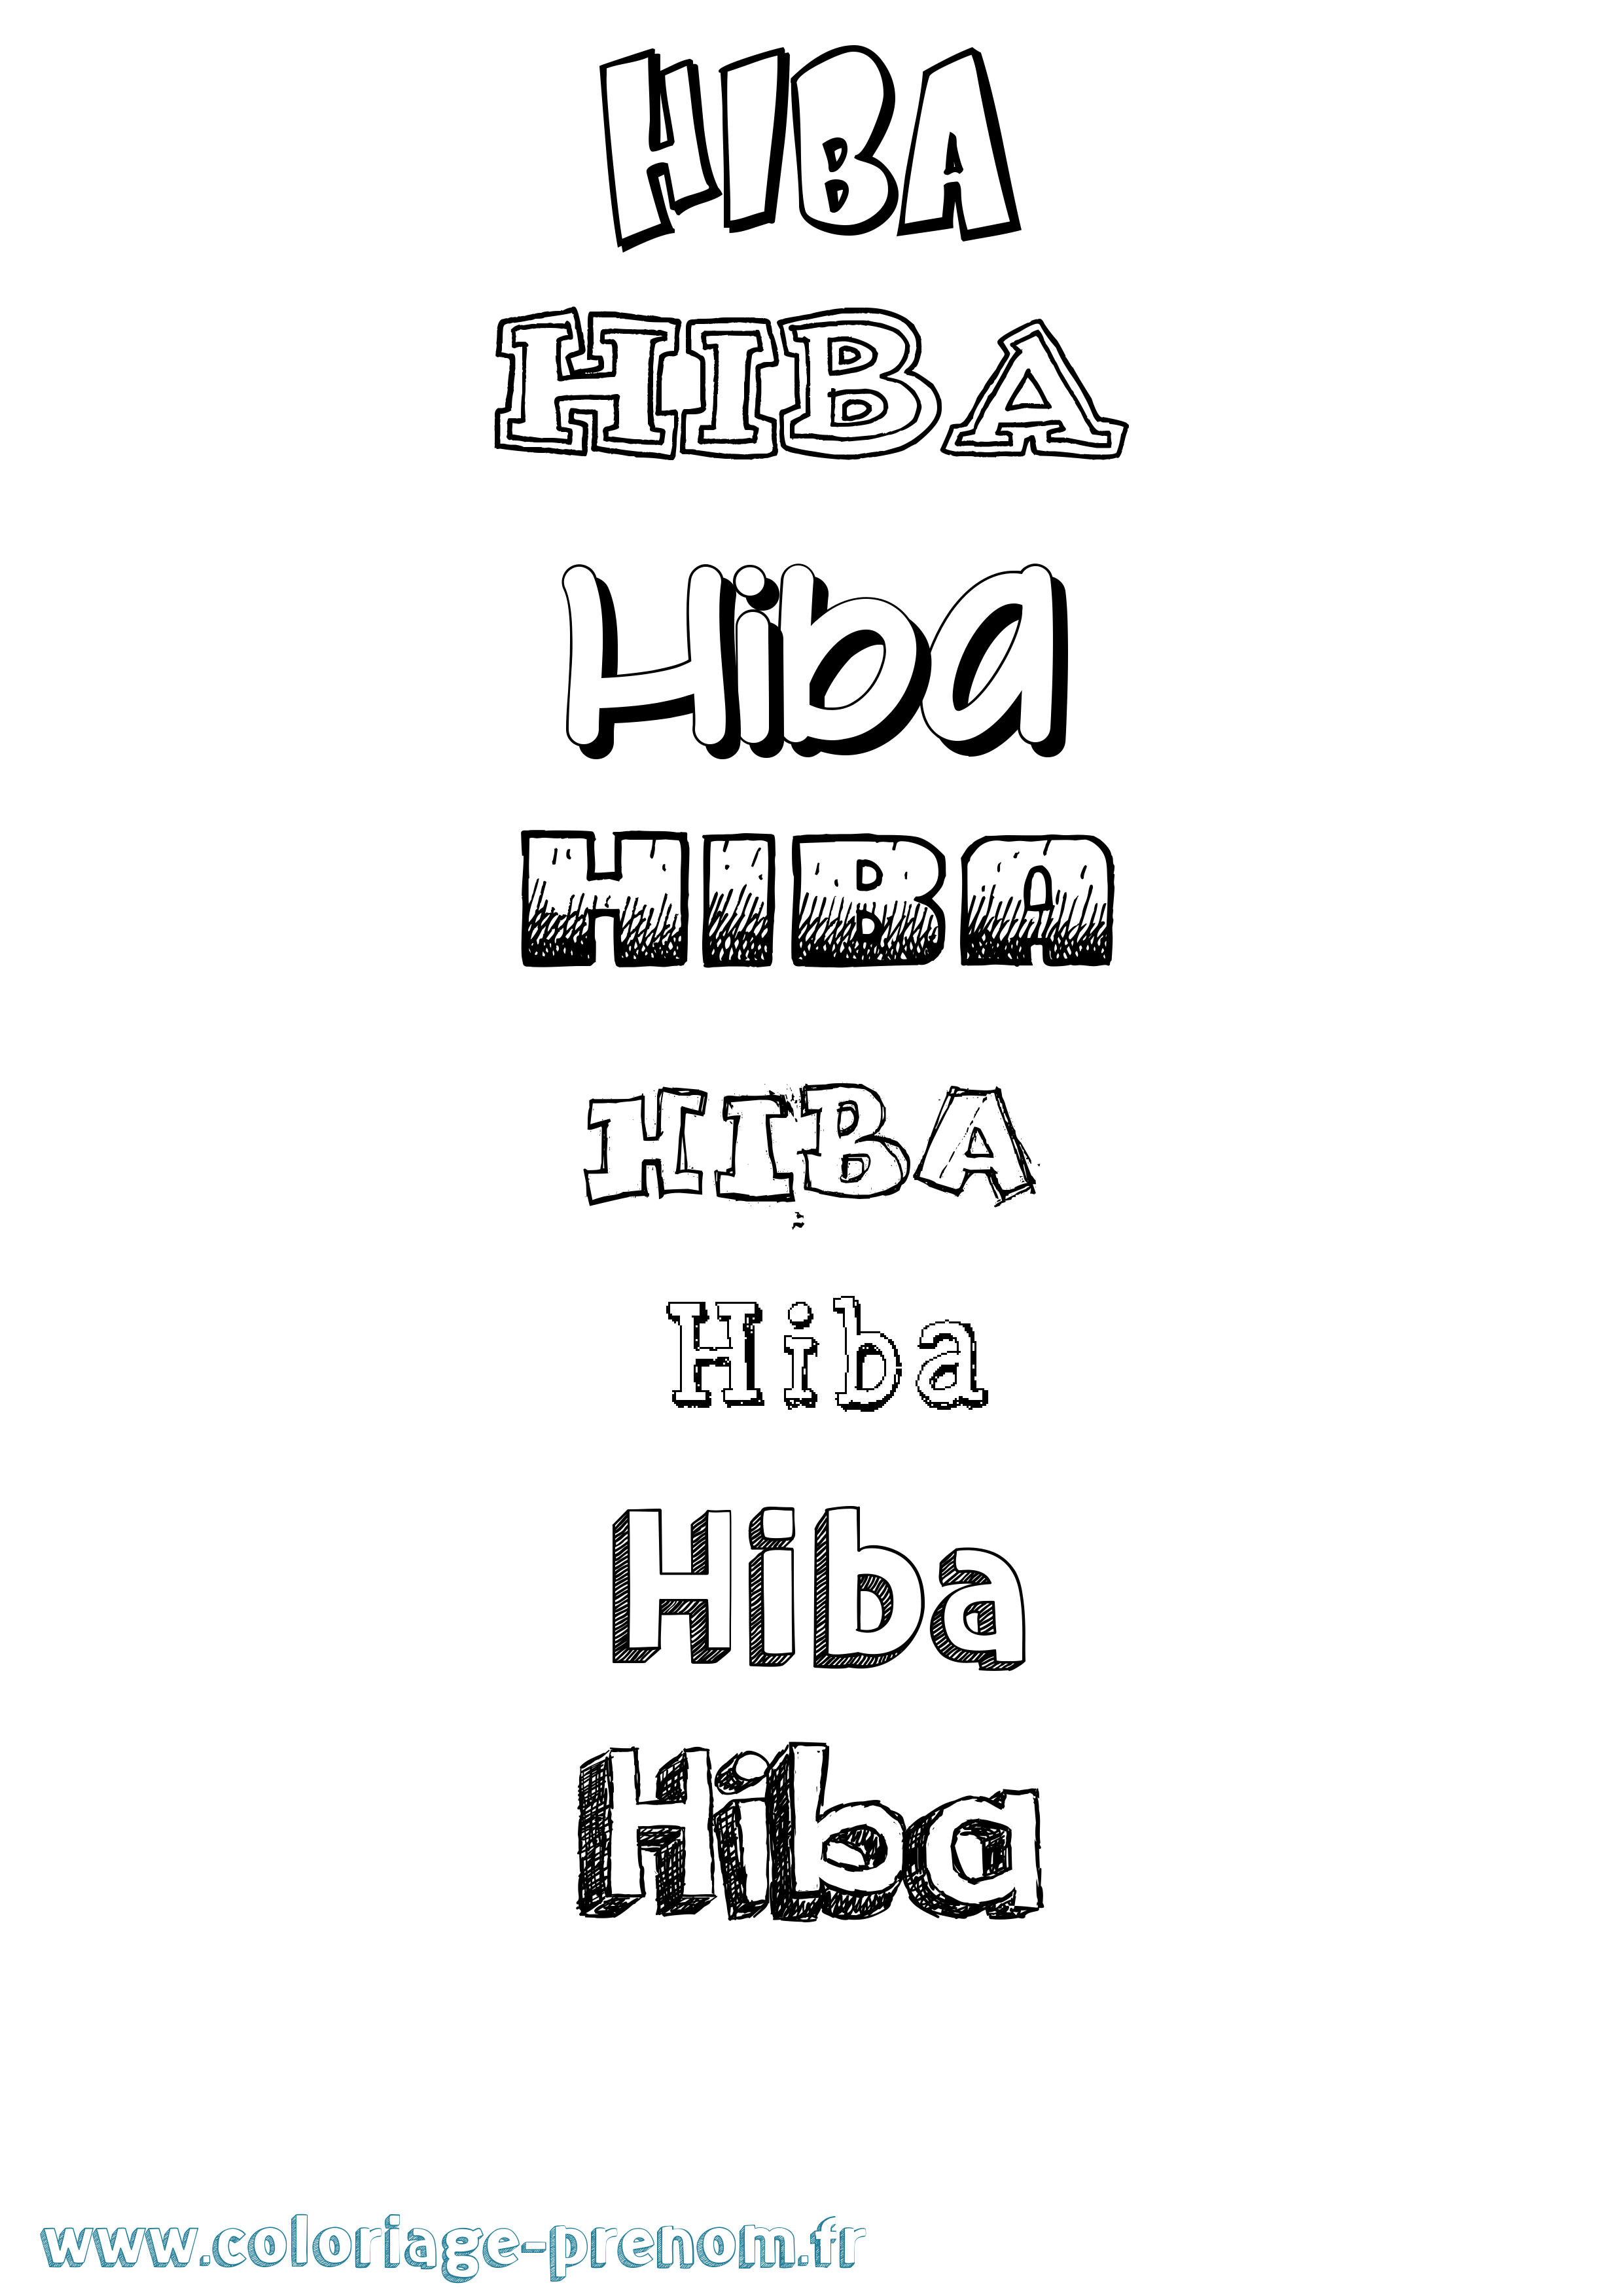 Coloriage prénom Hiba